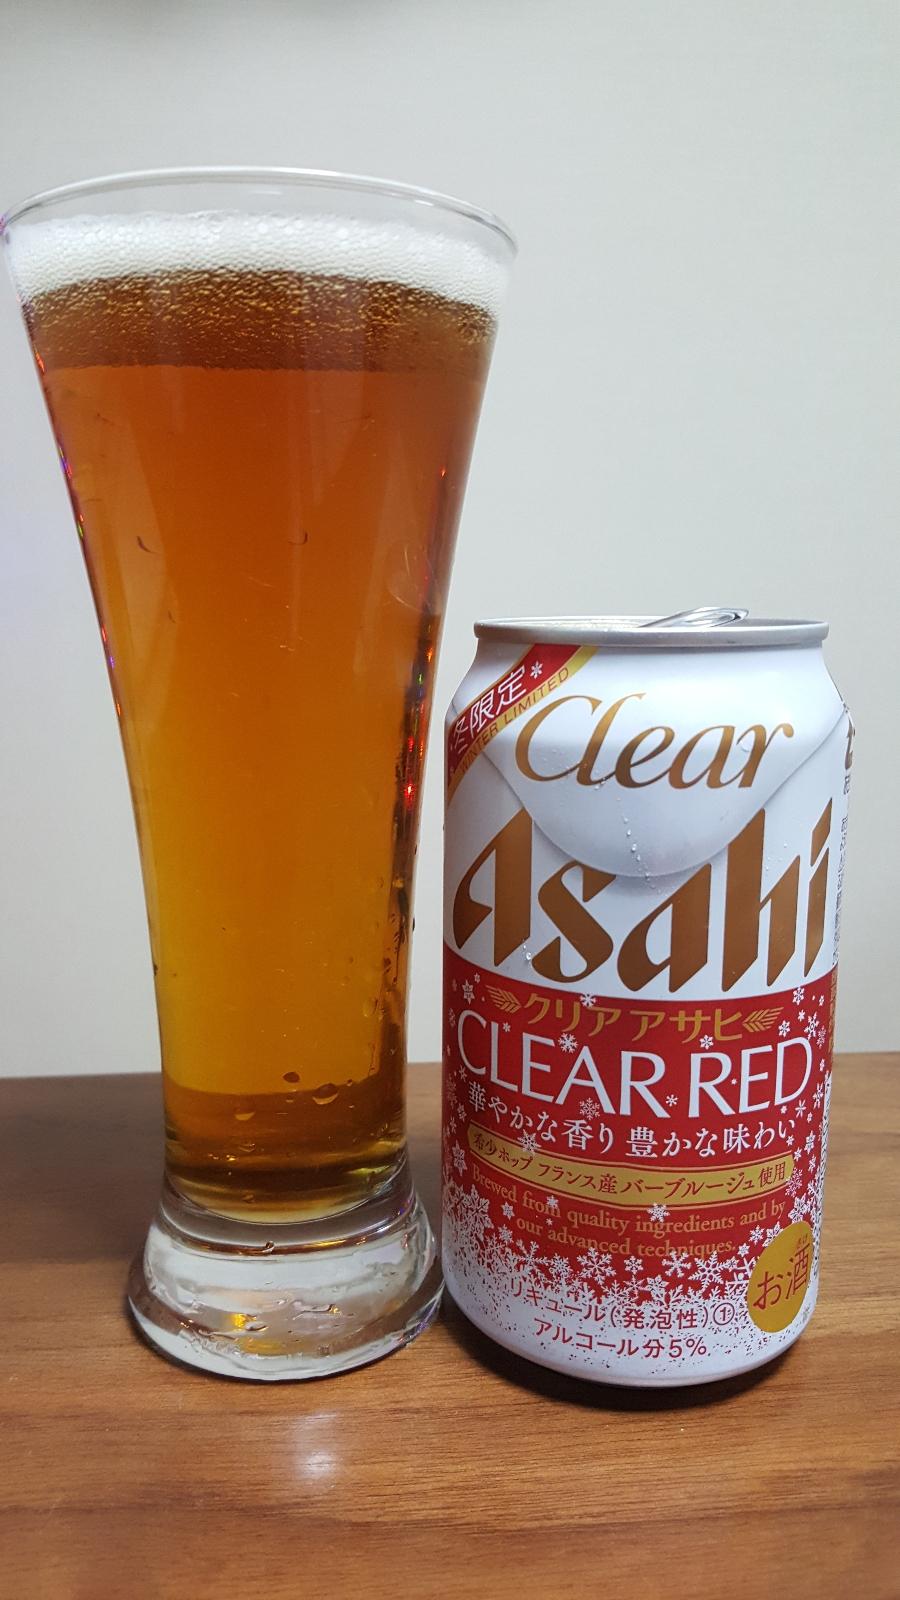 Asahi Clear Red